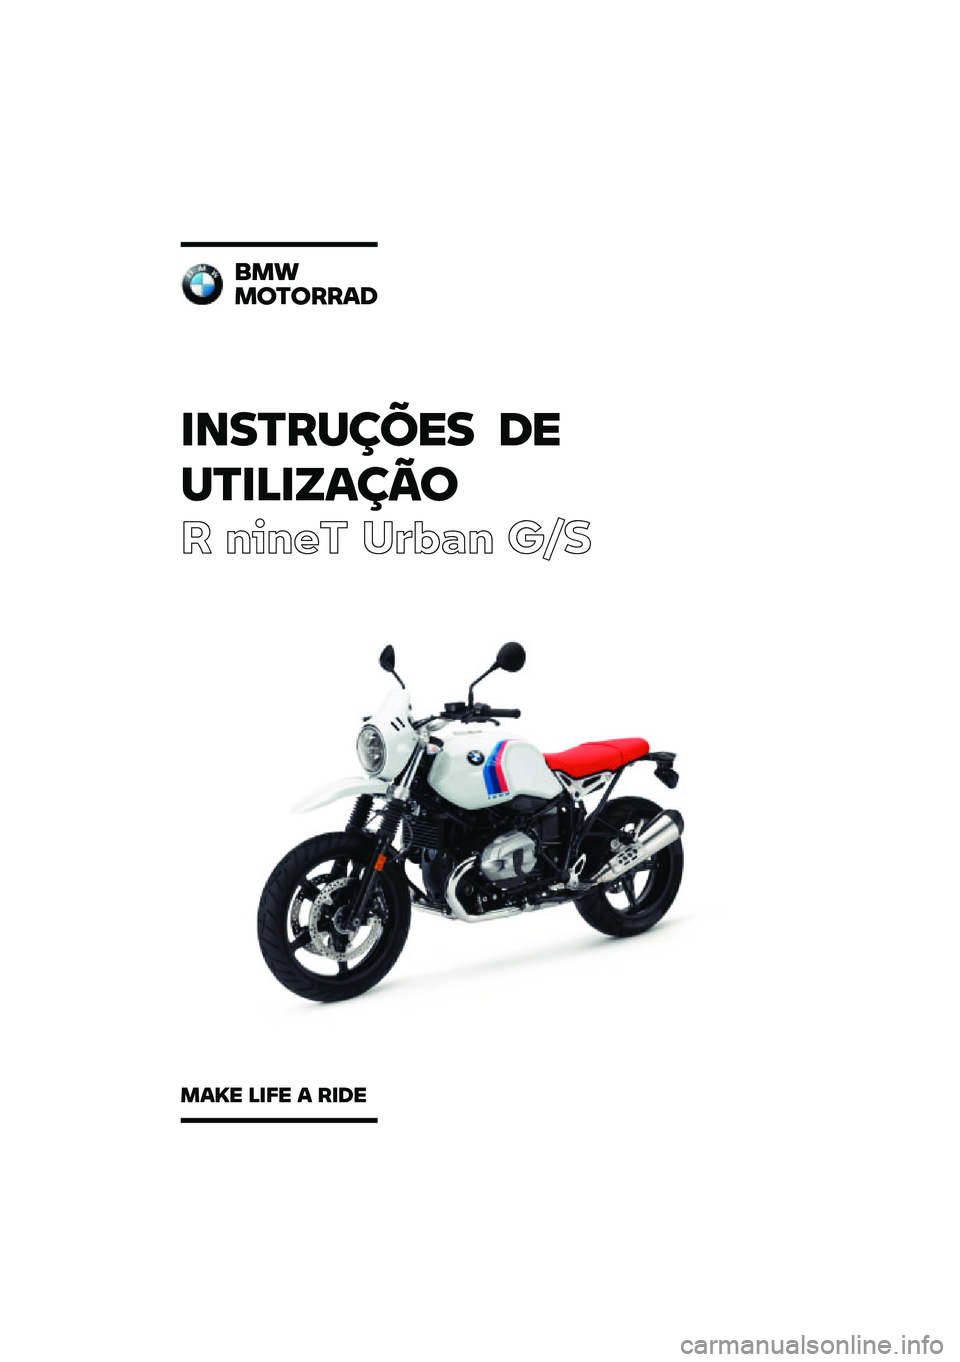 BMW MOTORRAD R NINE T URVAN G/S 2020  Manual do condutor (in Portuguese) �������\b�	�\f� �
�\f
��������\b��

� ����� ��\b�	�
� ��\f�
���
��
��
����
����\f ����\f � ���
�\f 